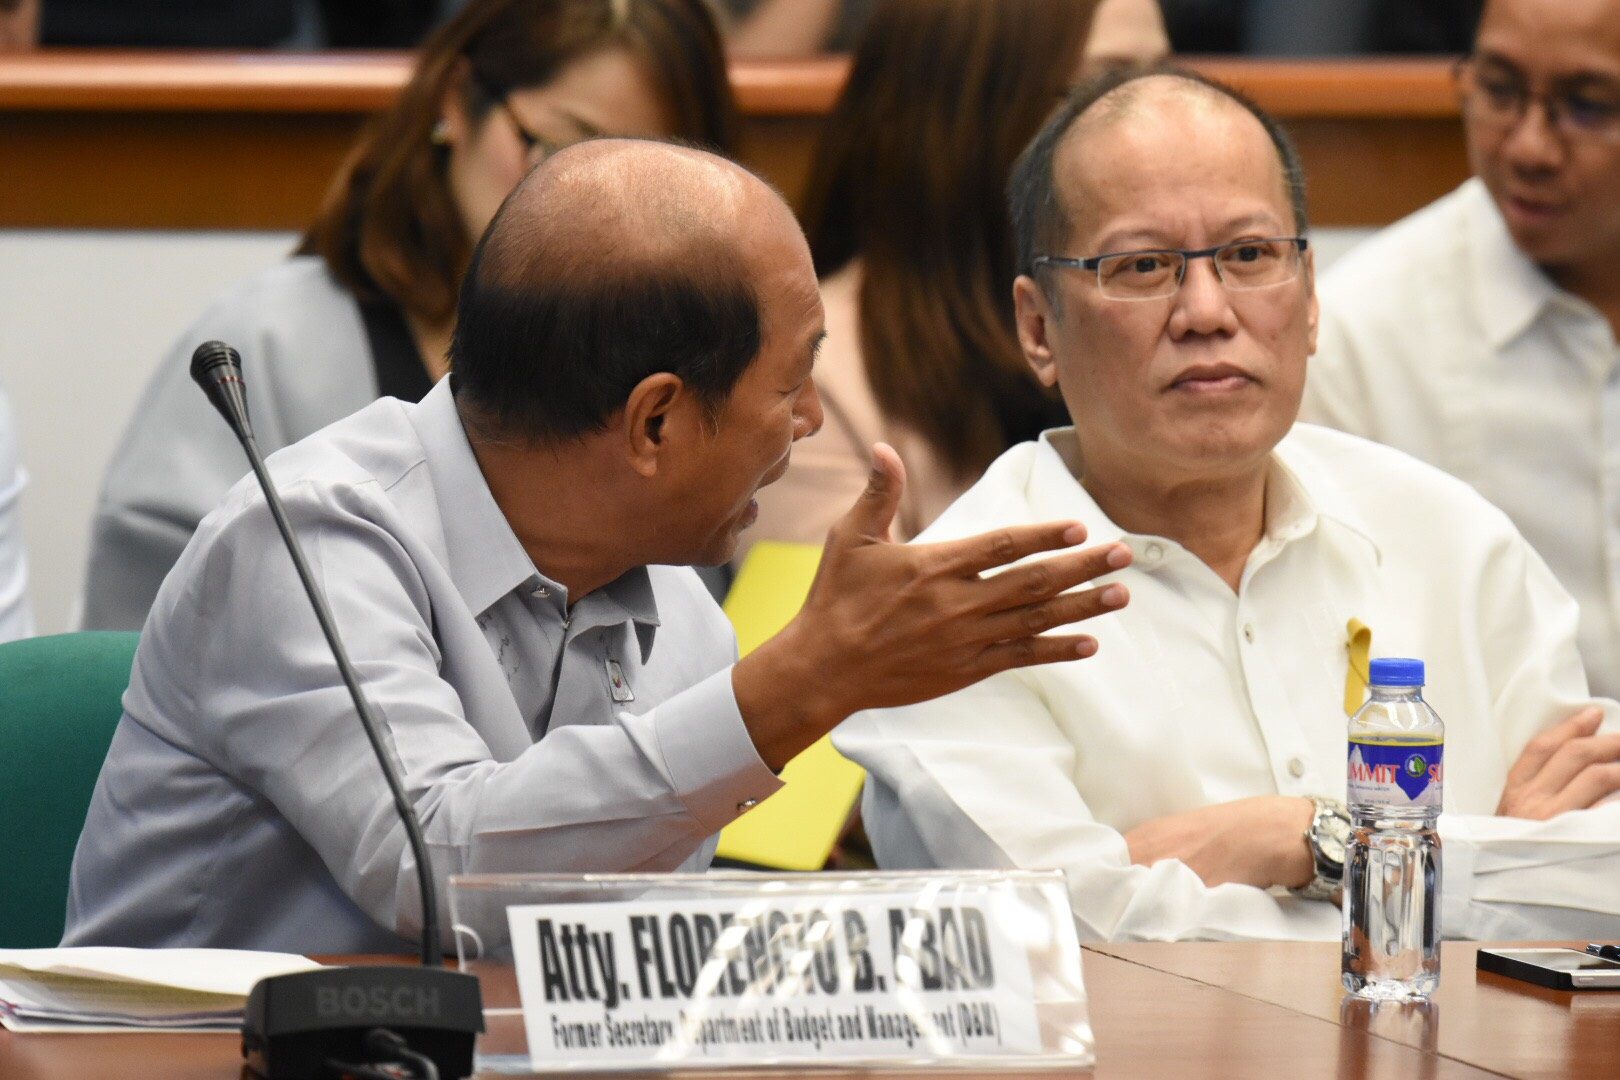 Aquino confirms Sanofi meetings but denies knowing questionable record